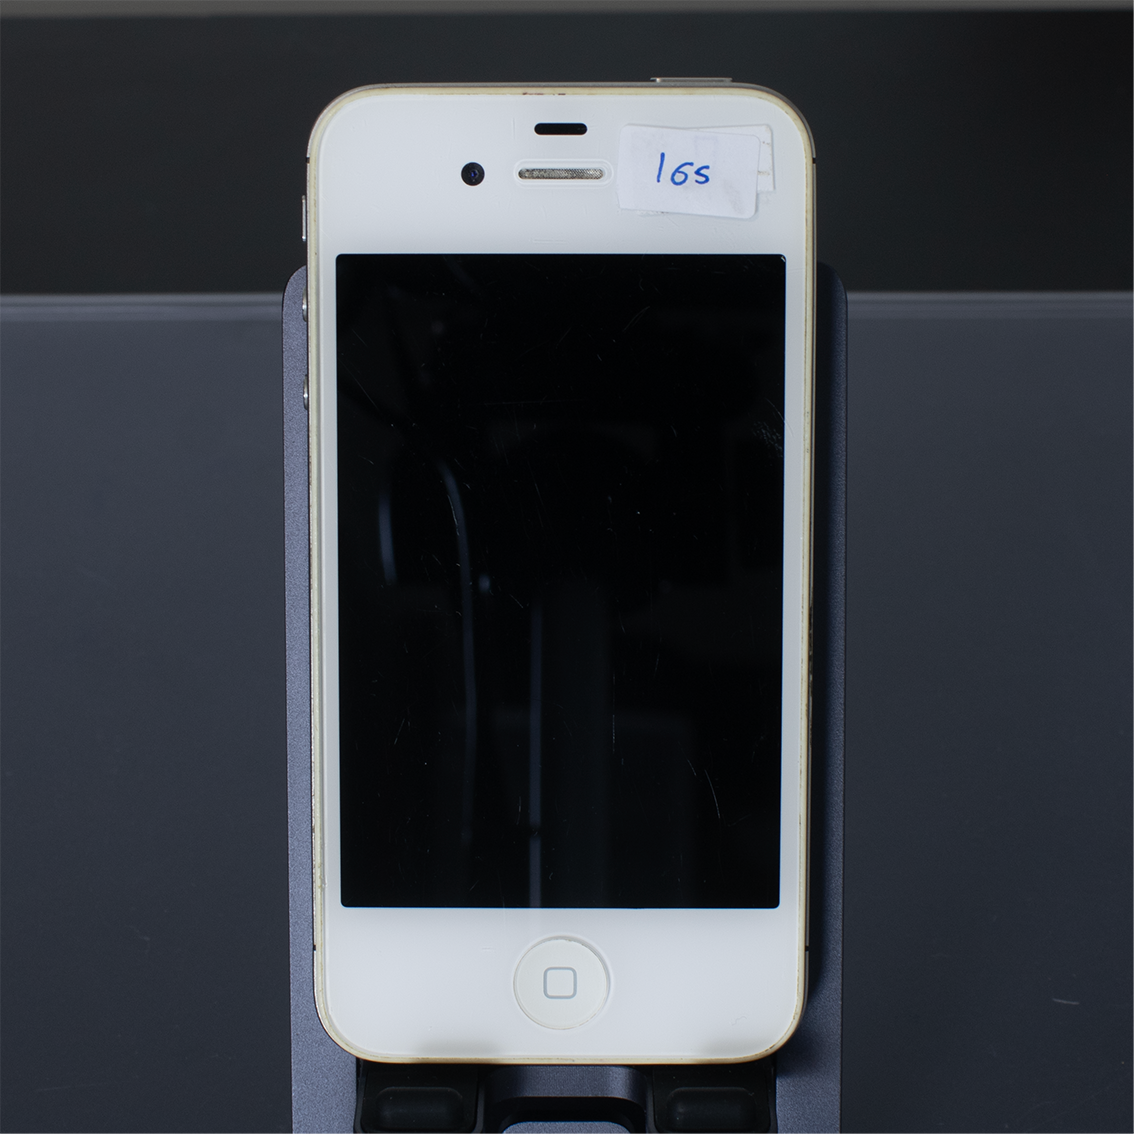 iPhone 4S - 8GB - iOS 9.3.5 - Unlocked - All good